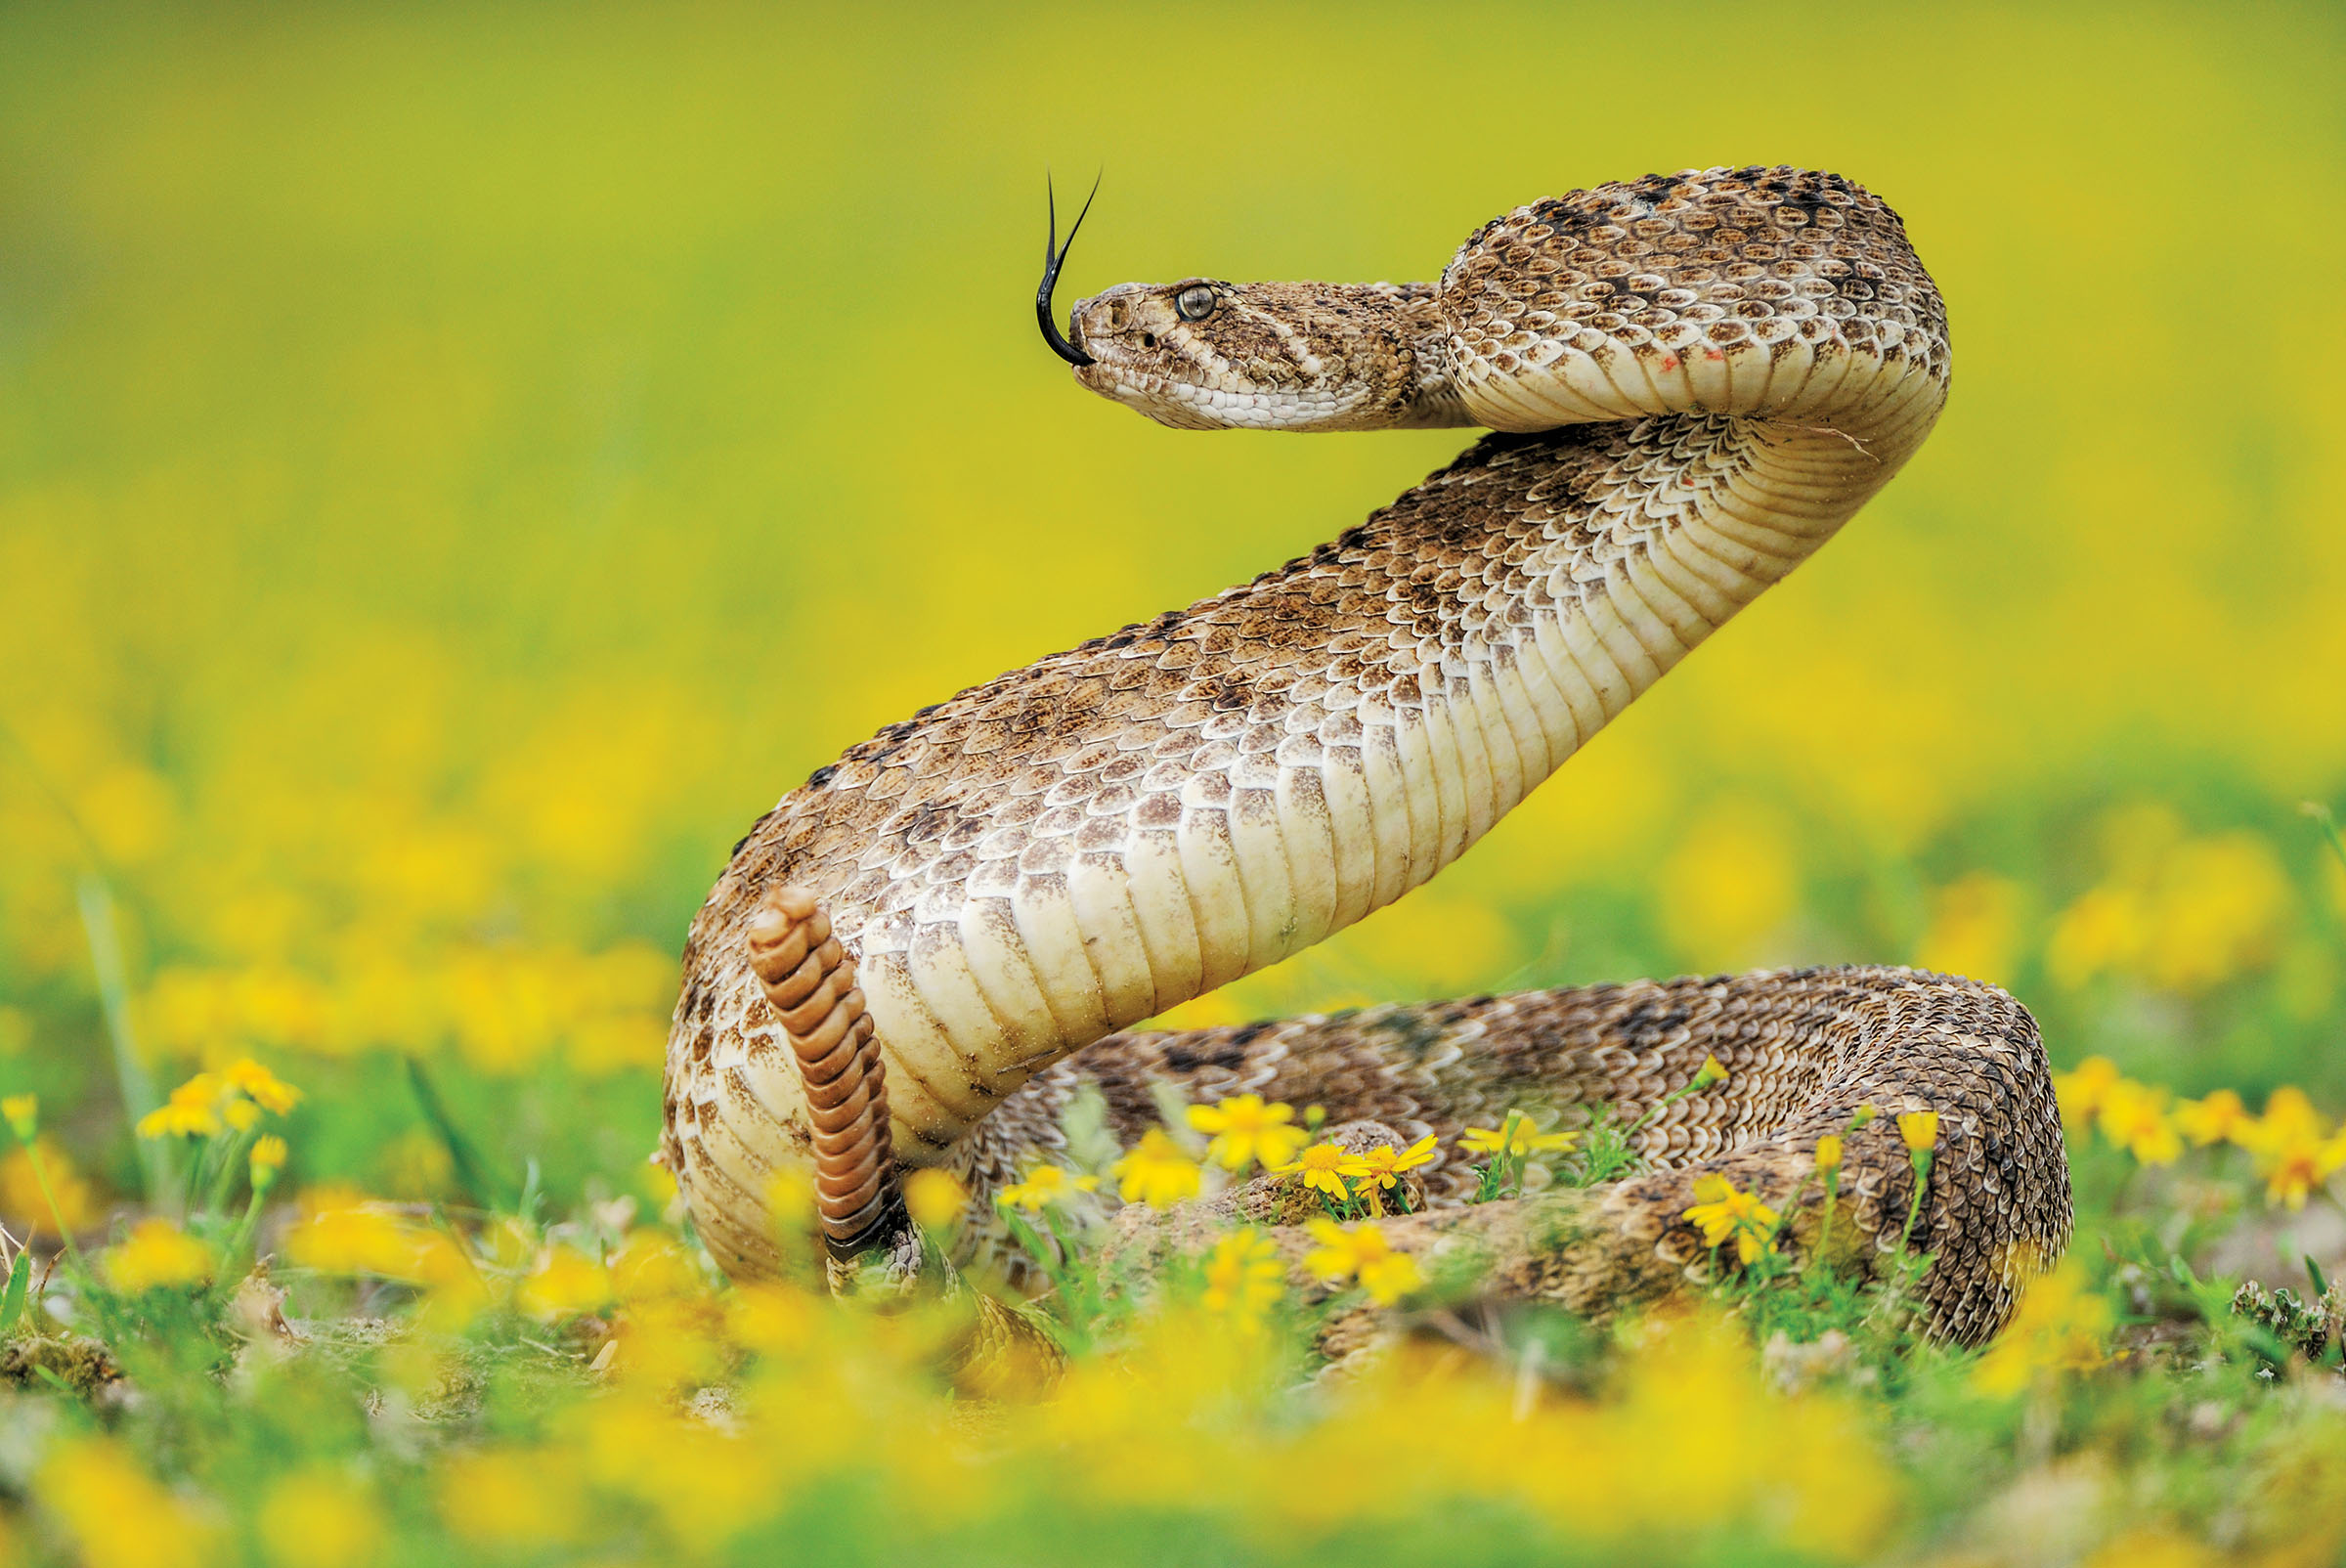 https://texashighways.com/wp-content/uploads/2020/02/snakes-diamondback-rattlesnake.jpg